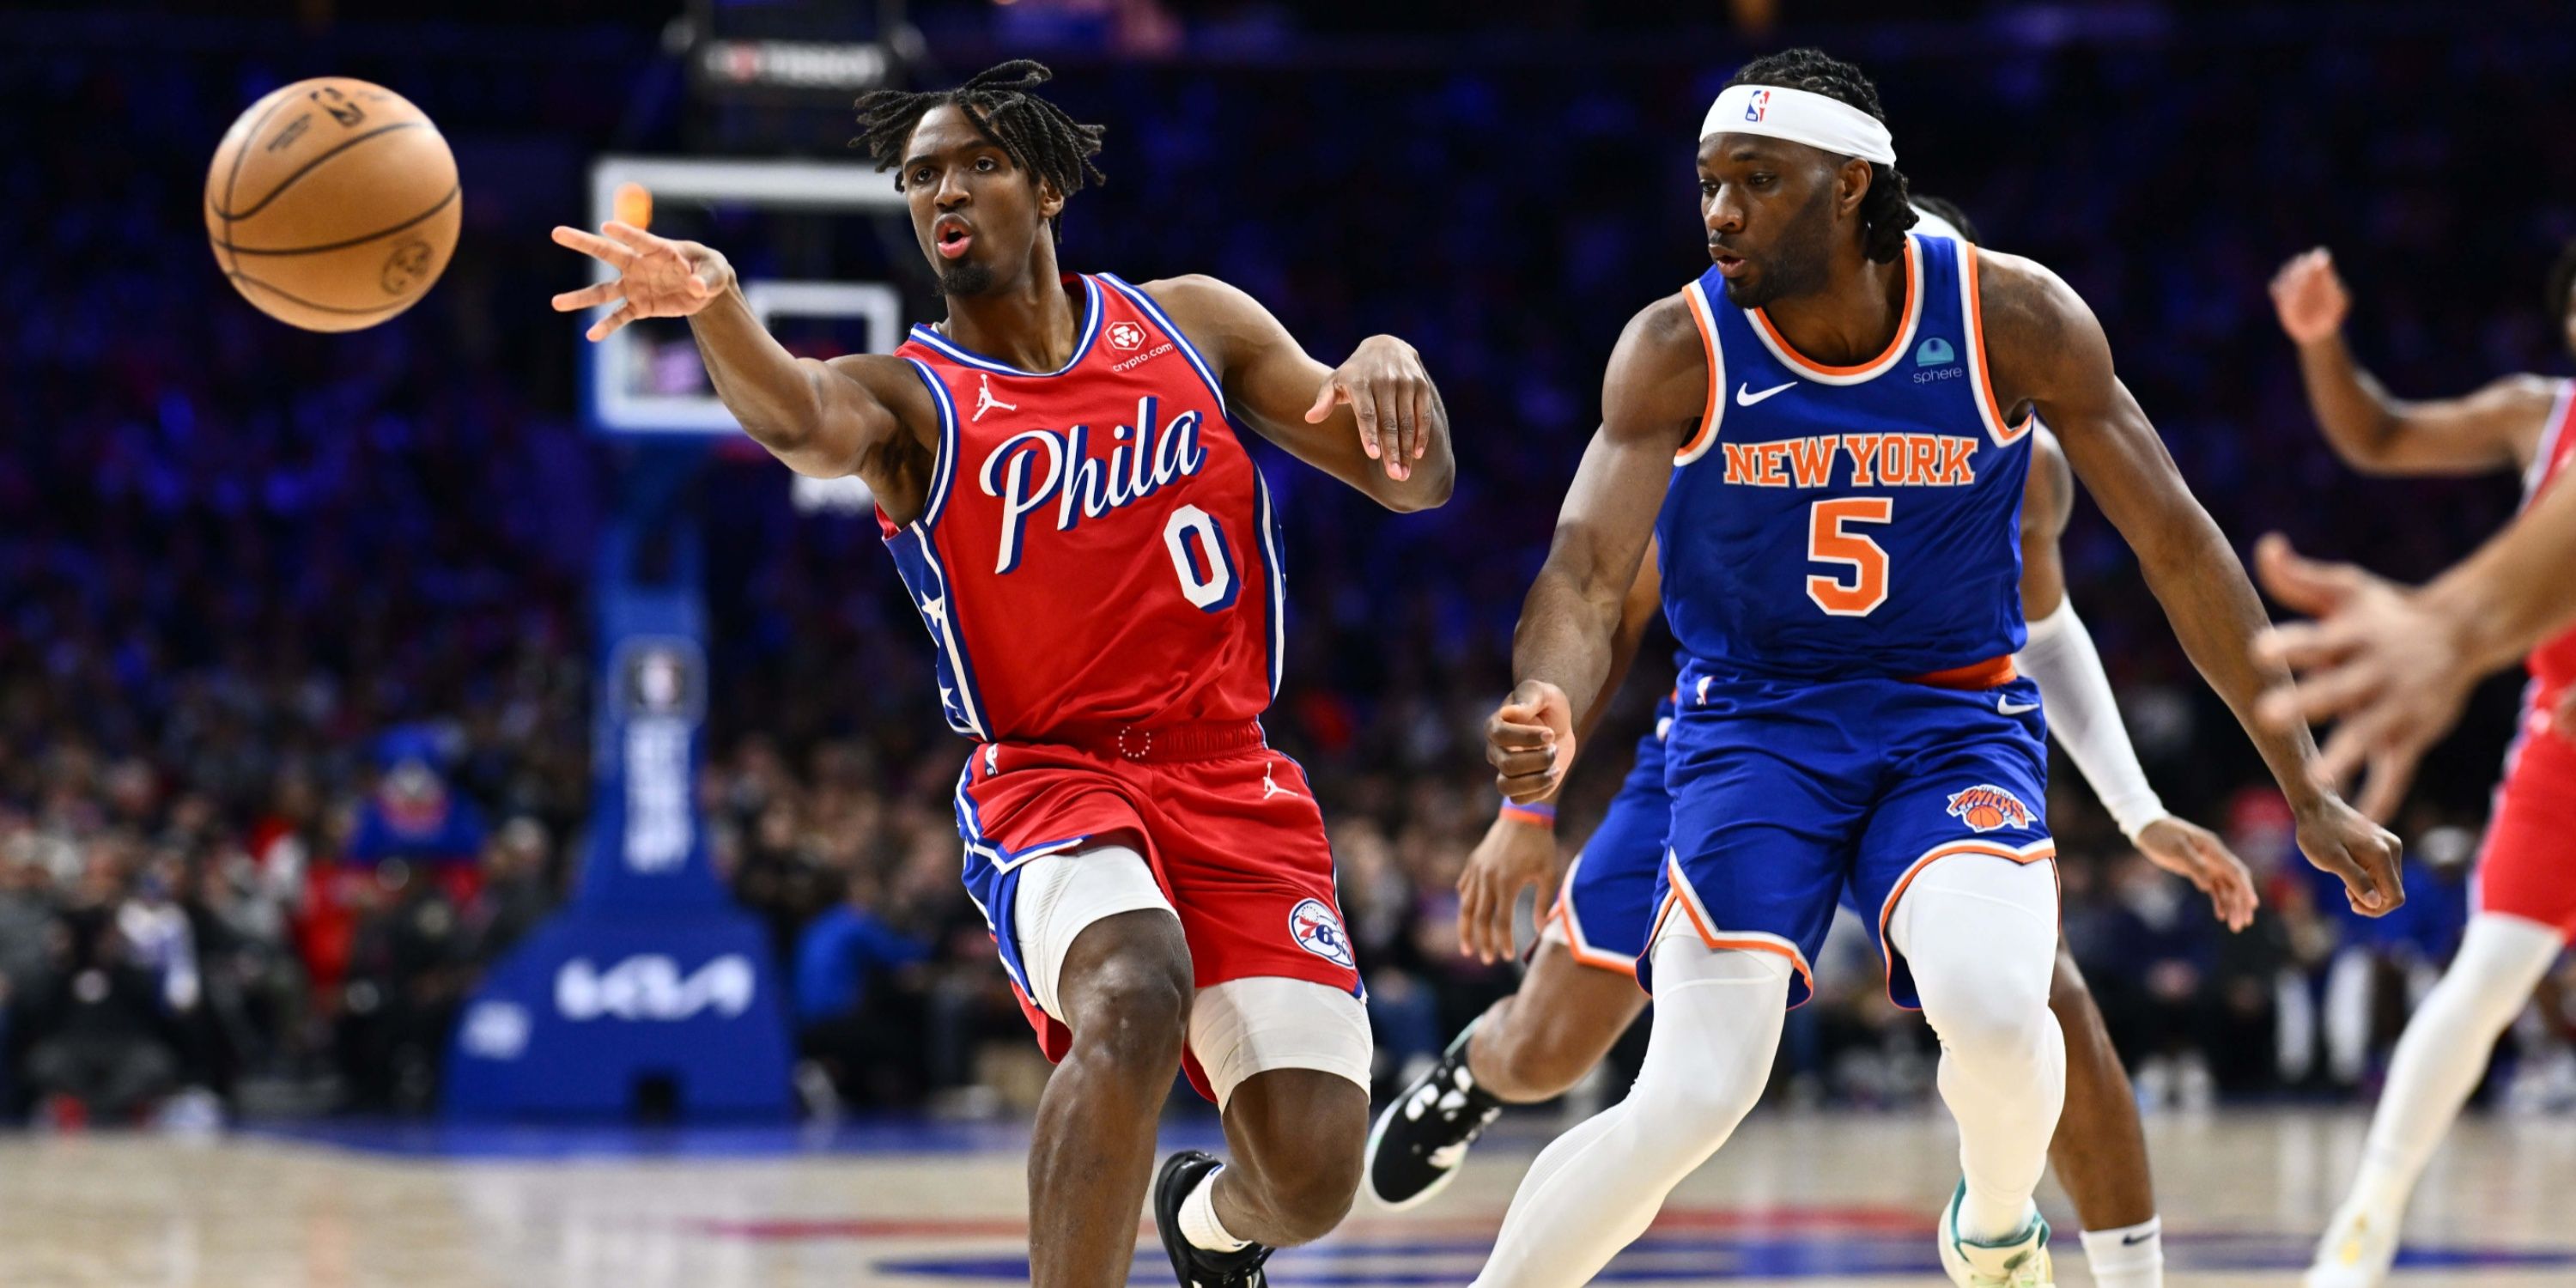 NBA Playoffs: Knicks vs. 76ers Rivalry Renewed with Key Players to Watch